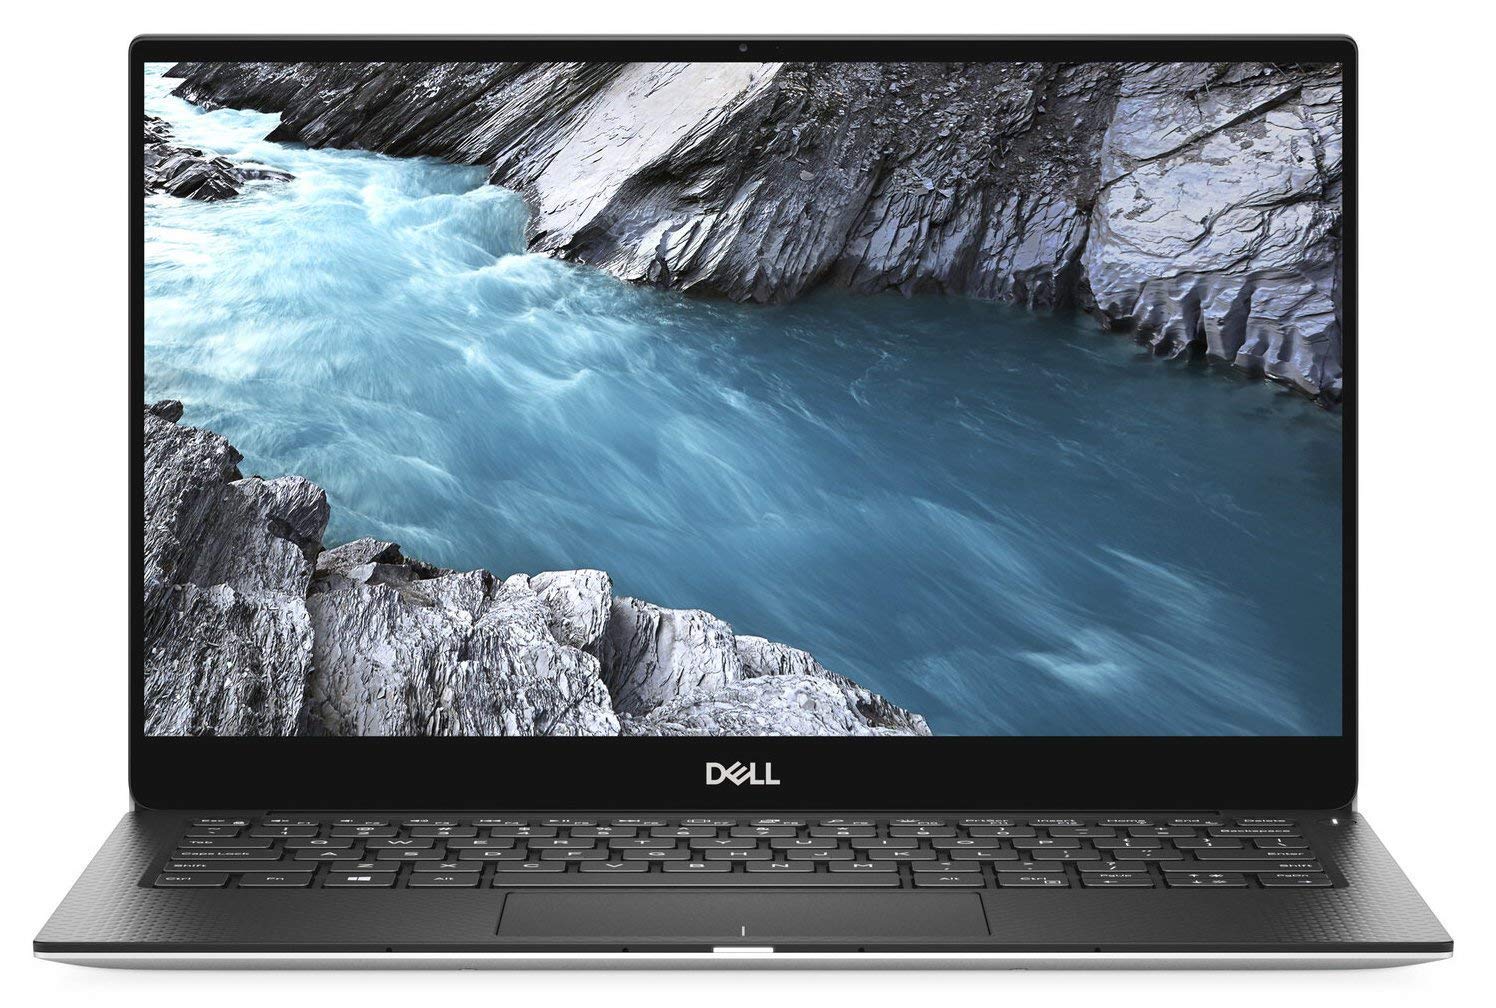 Dell 2019 XPS 13 9380 Laptop, 13.3-inch 4K UHD 3840x2160 Touch Screen, Intel Core i7-8565U, 16GB Ram, 512GB SSD, Webcam On Top, FP Reader, Windows 10 pro (Renewed)